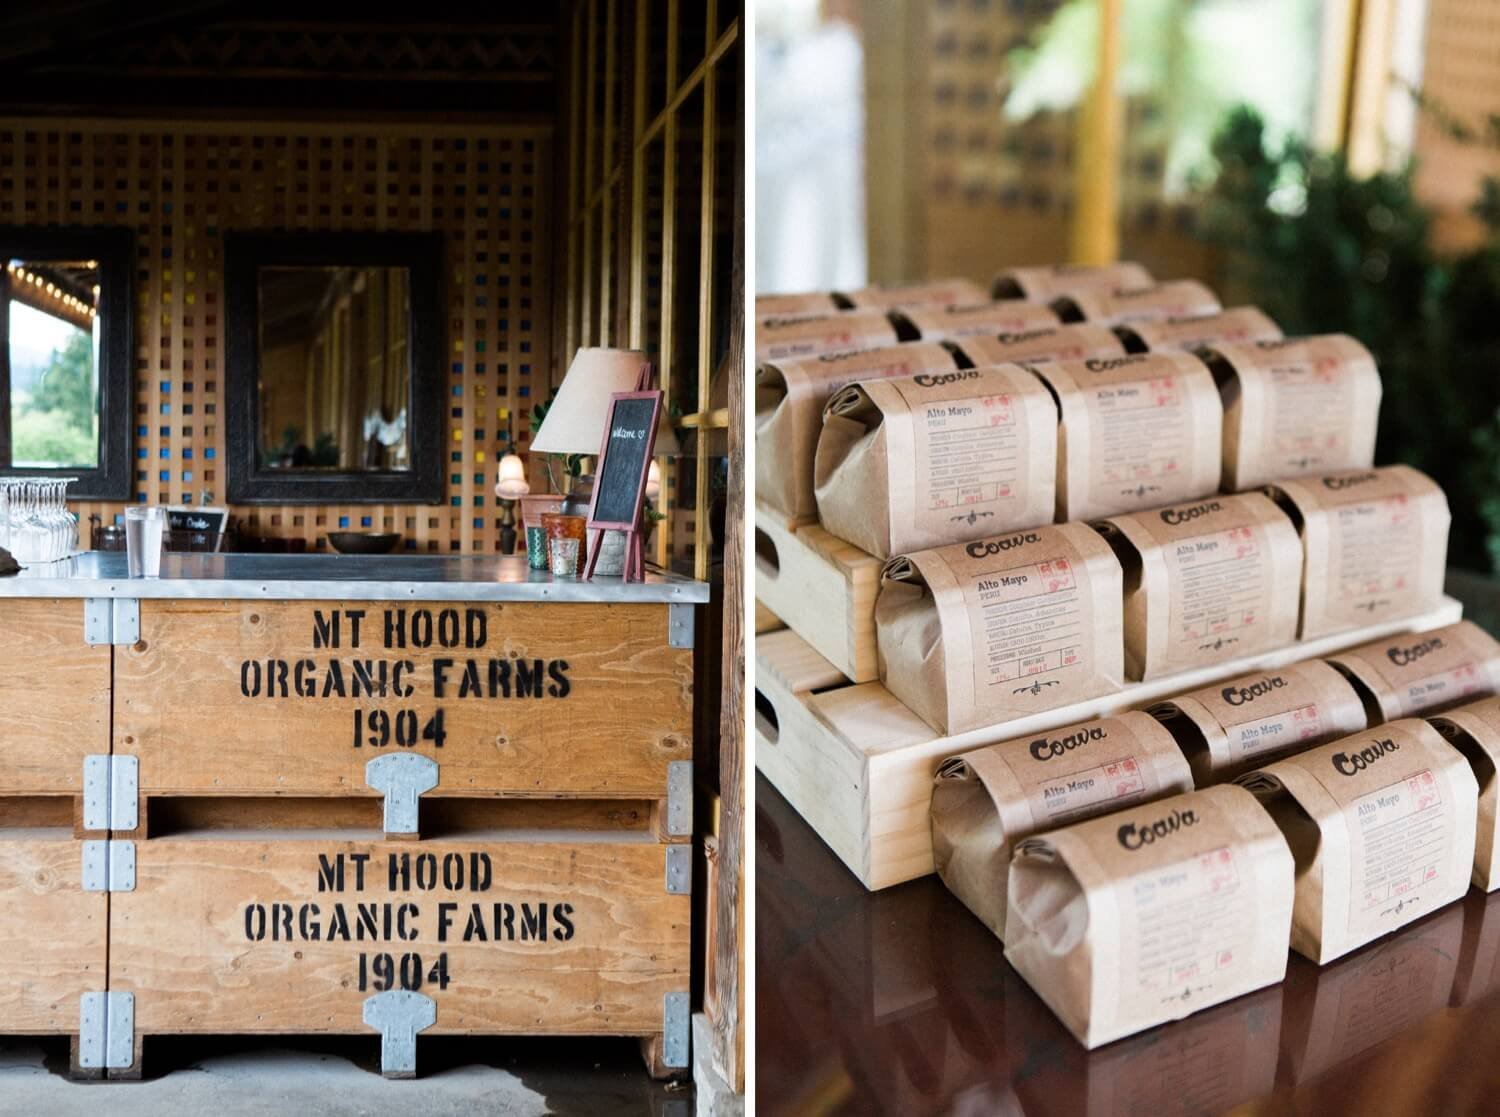 042_Mount Hood Organic Farms Wedding-Bar setup made of wooden orchard bins.jpg